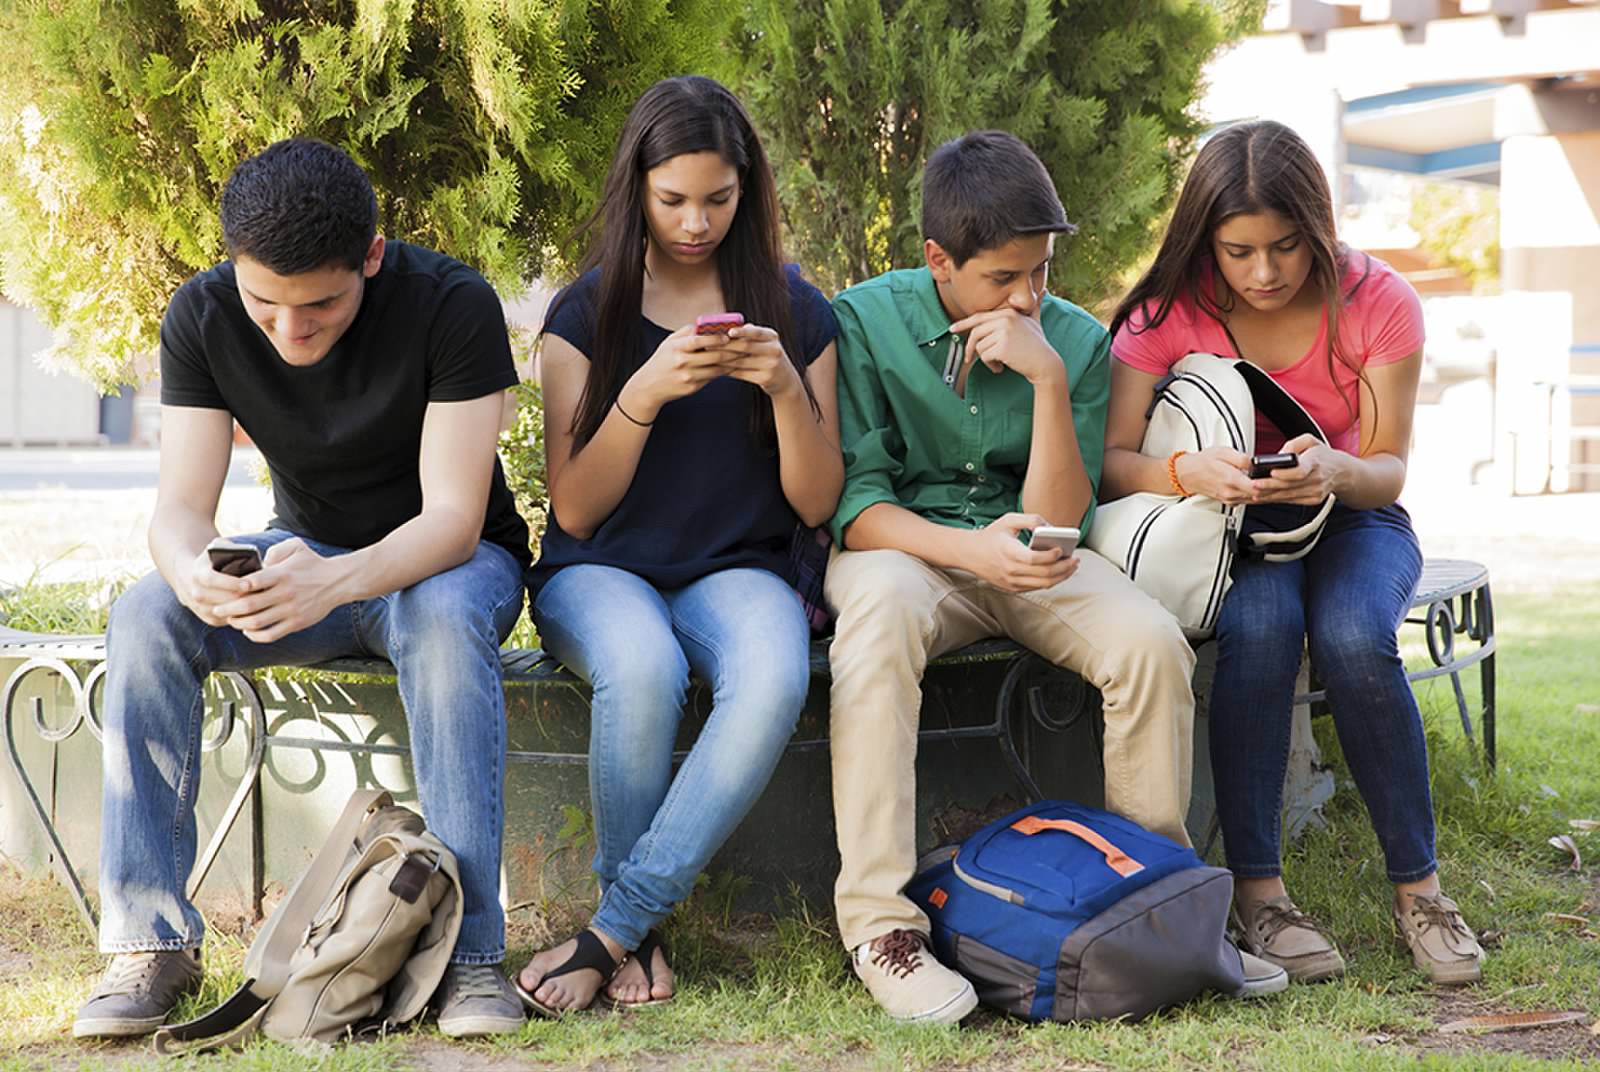 USA Today: Social Media and Sleep in Teens.